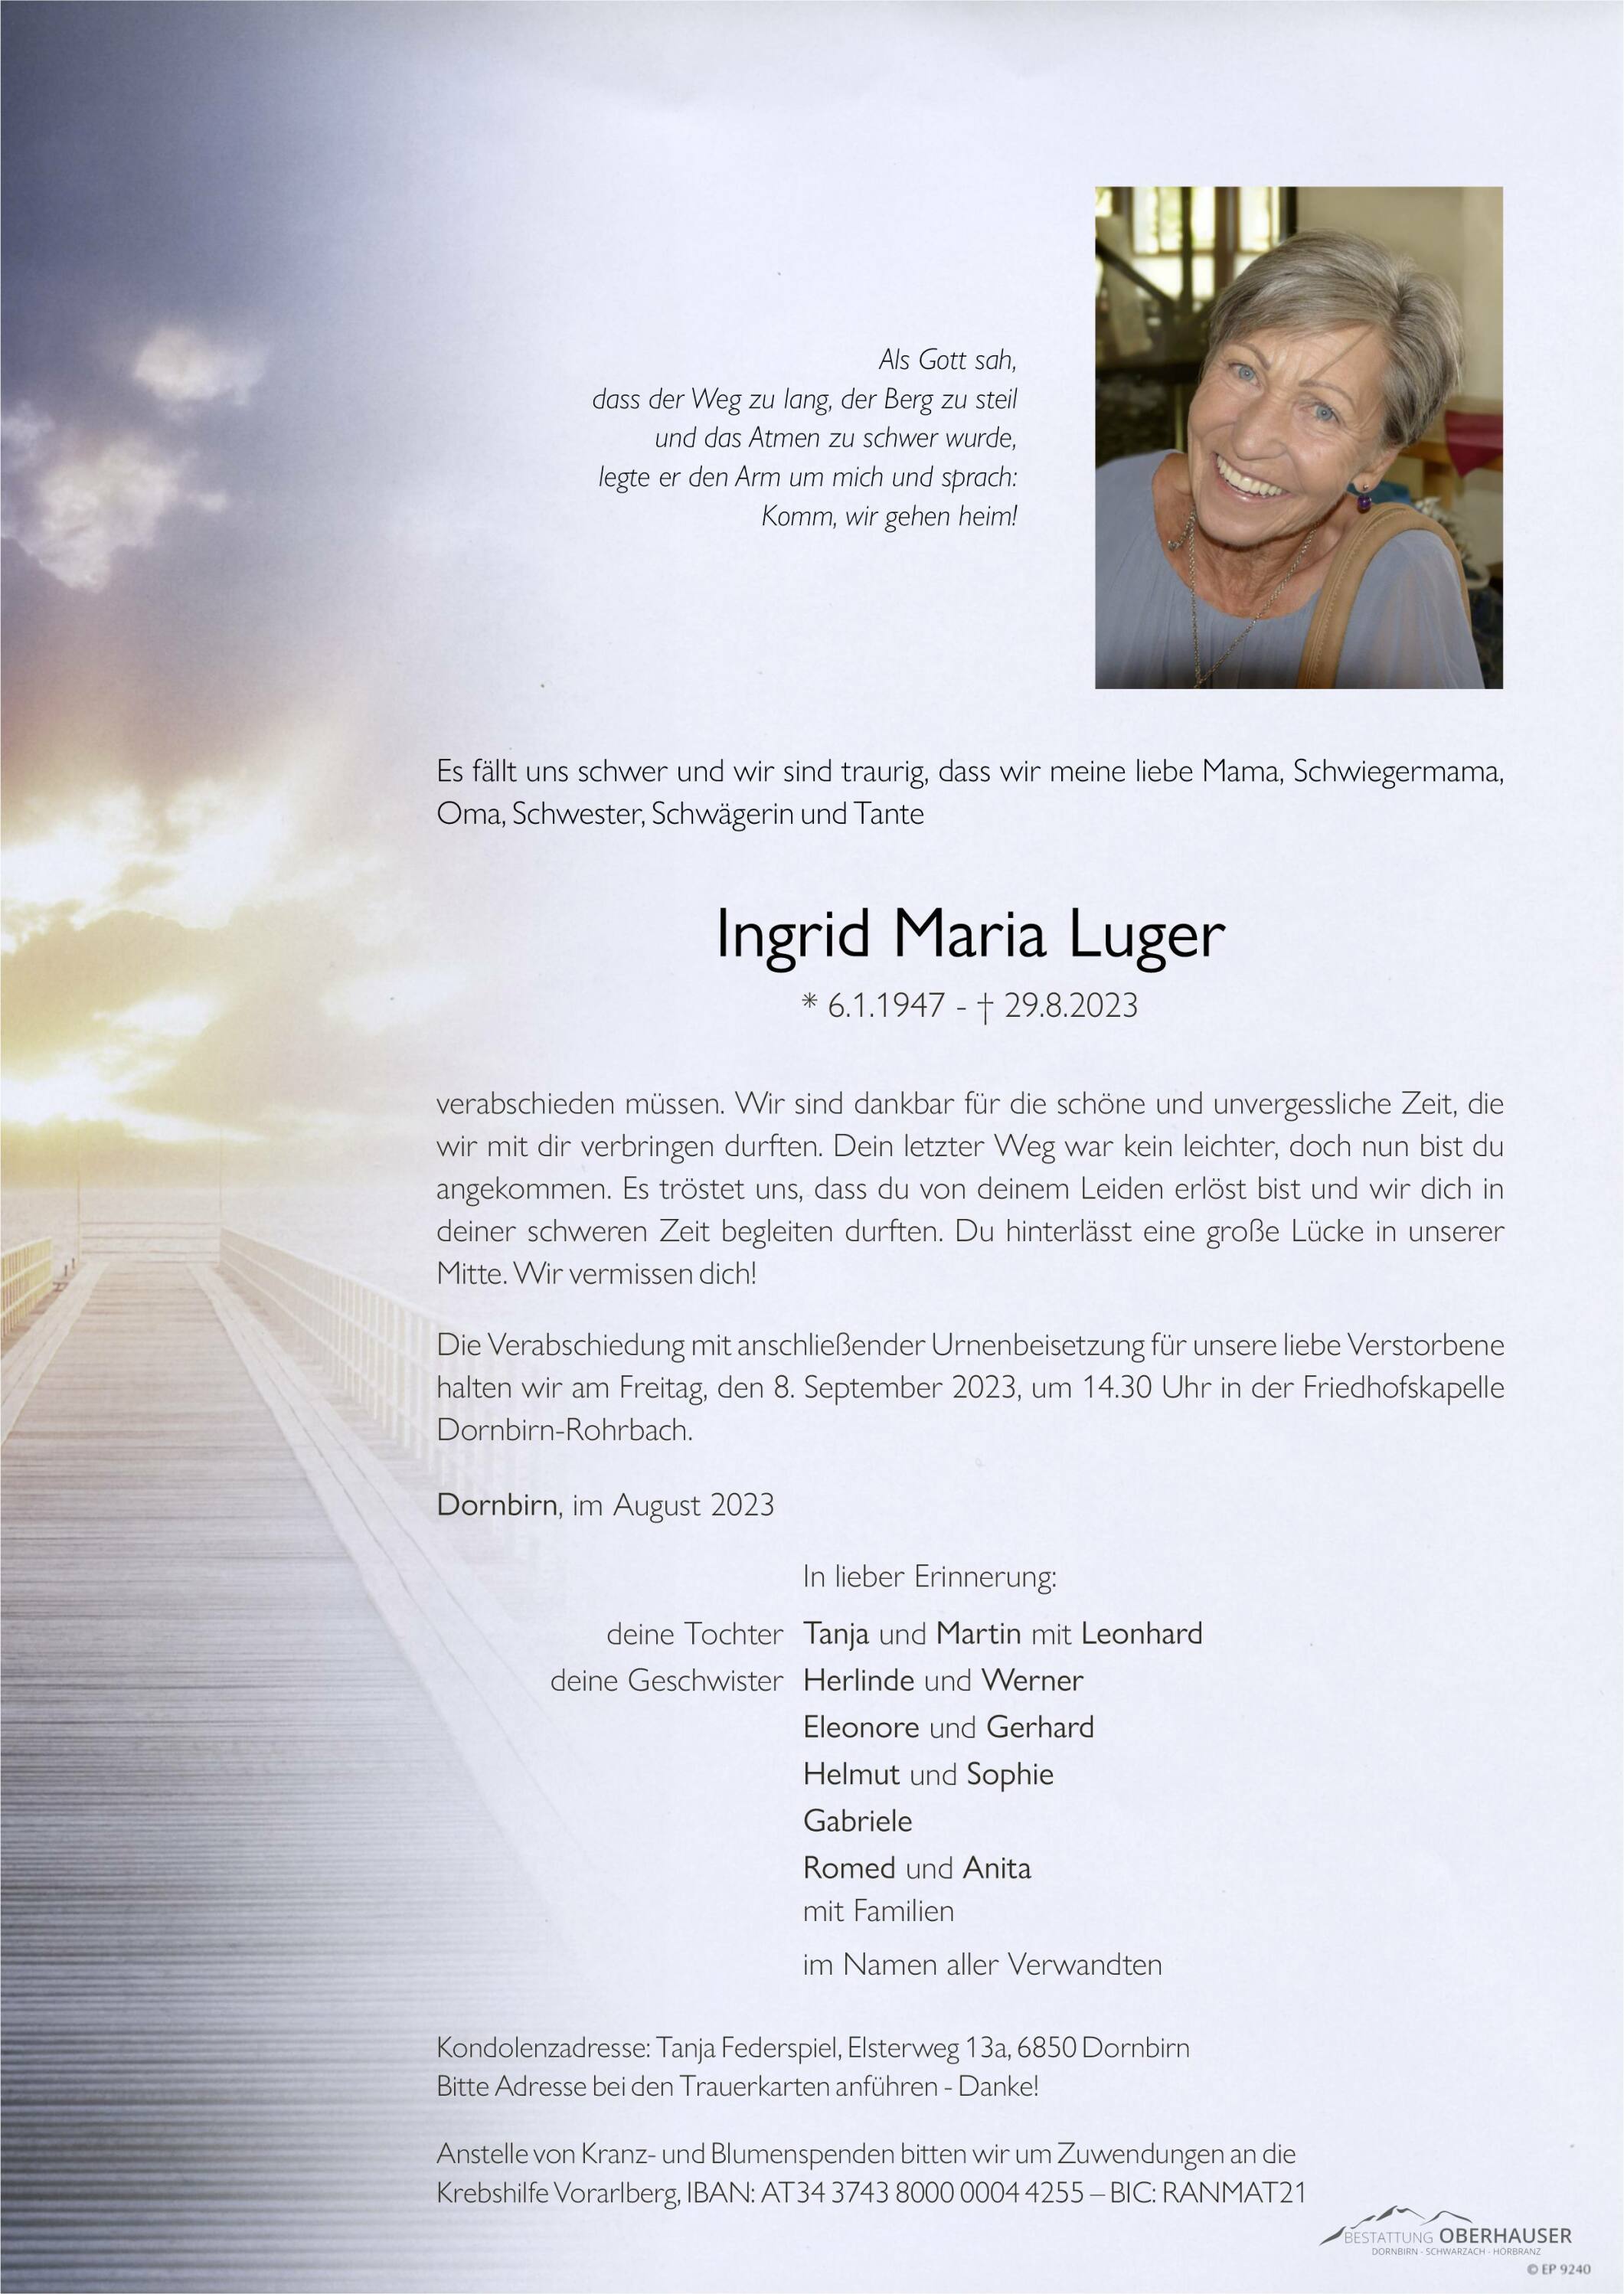 Ingrid Maria Luger